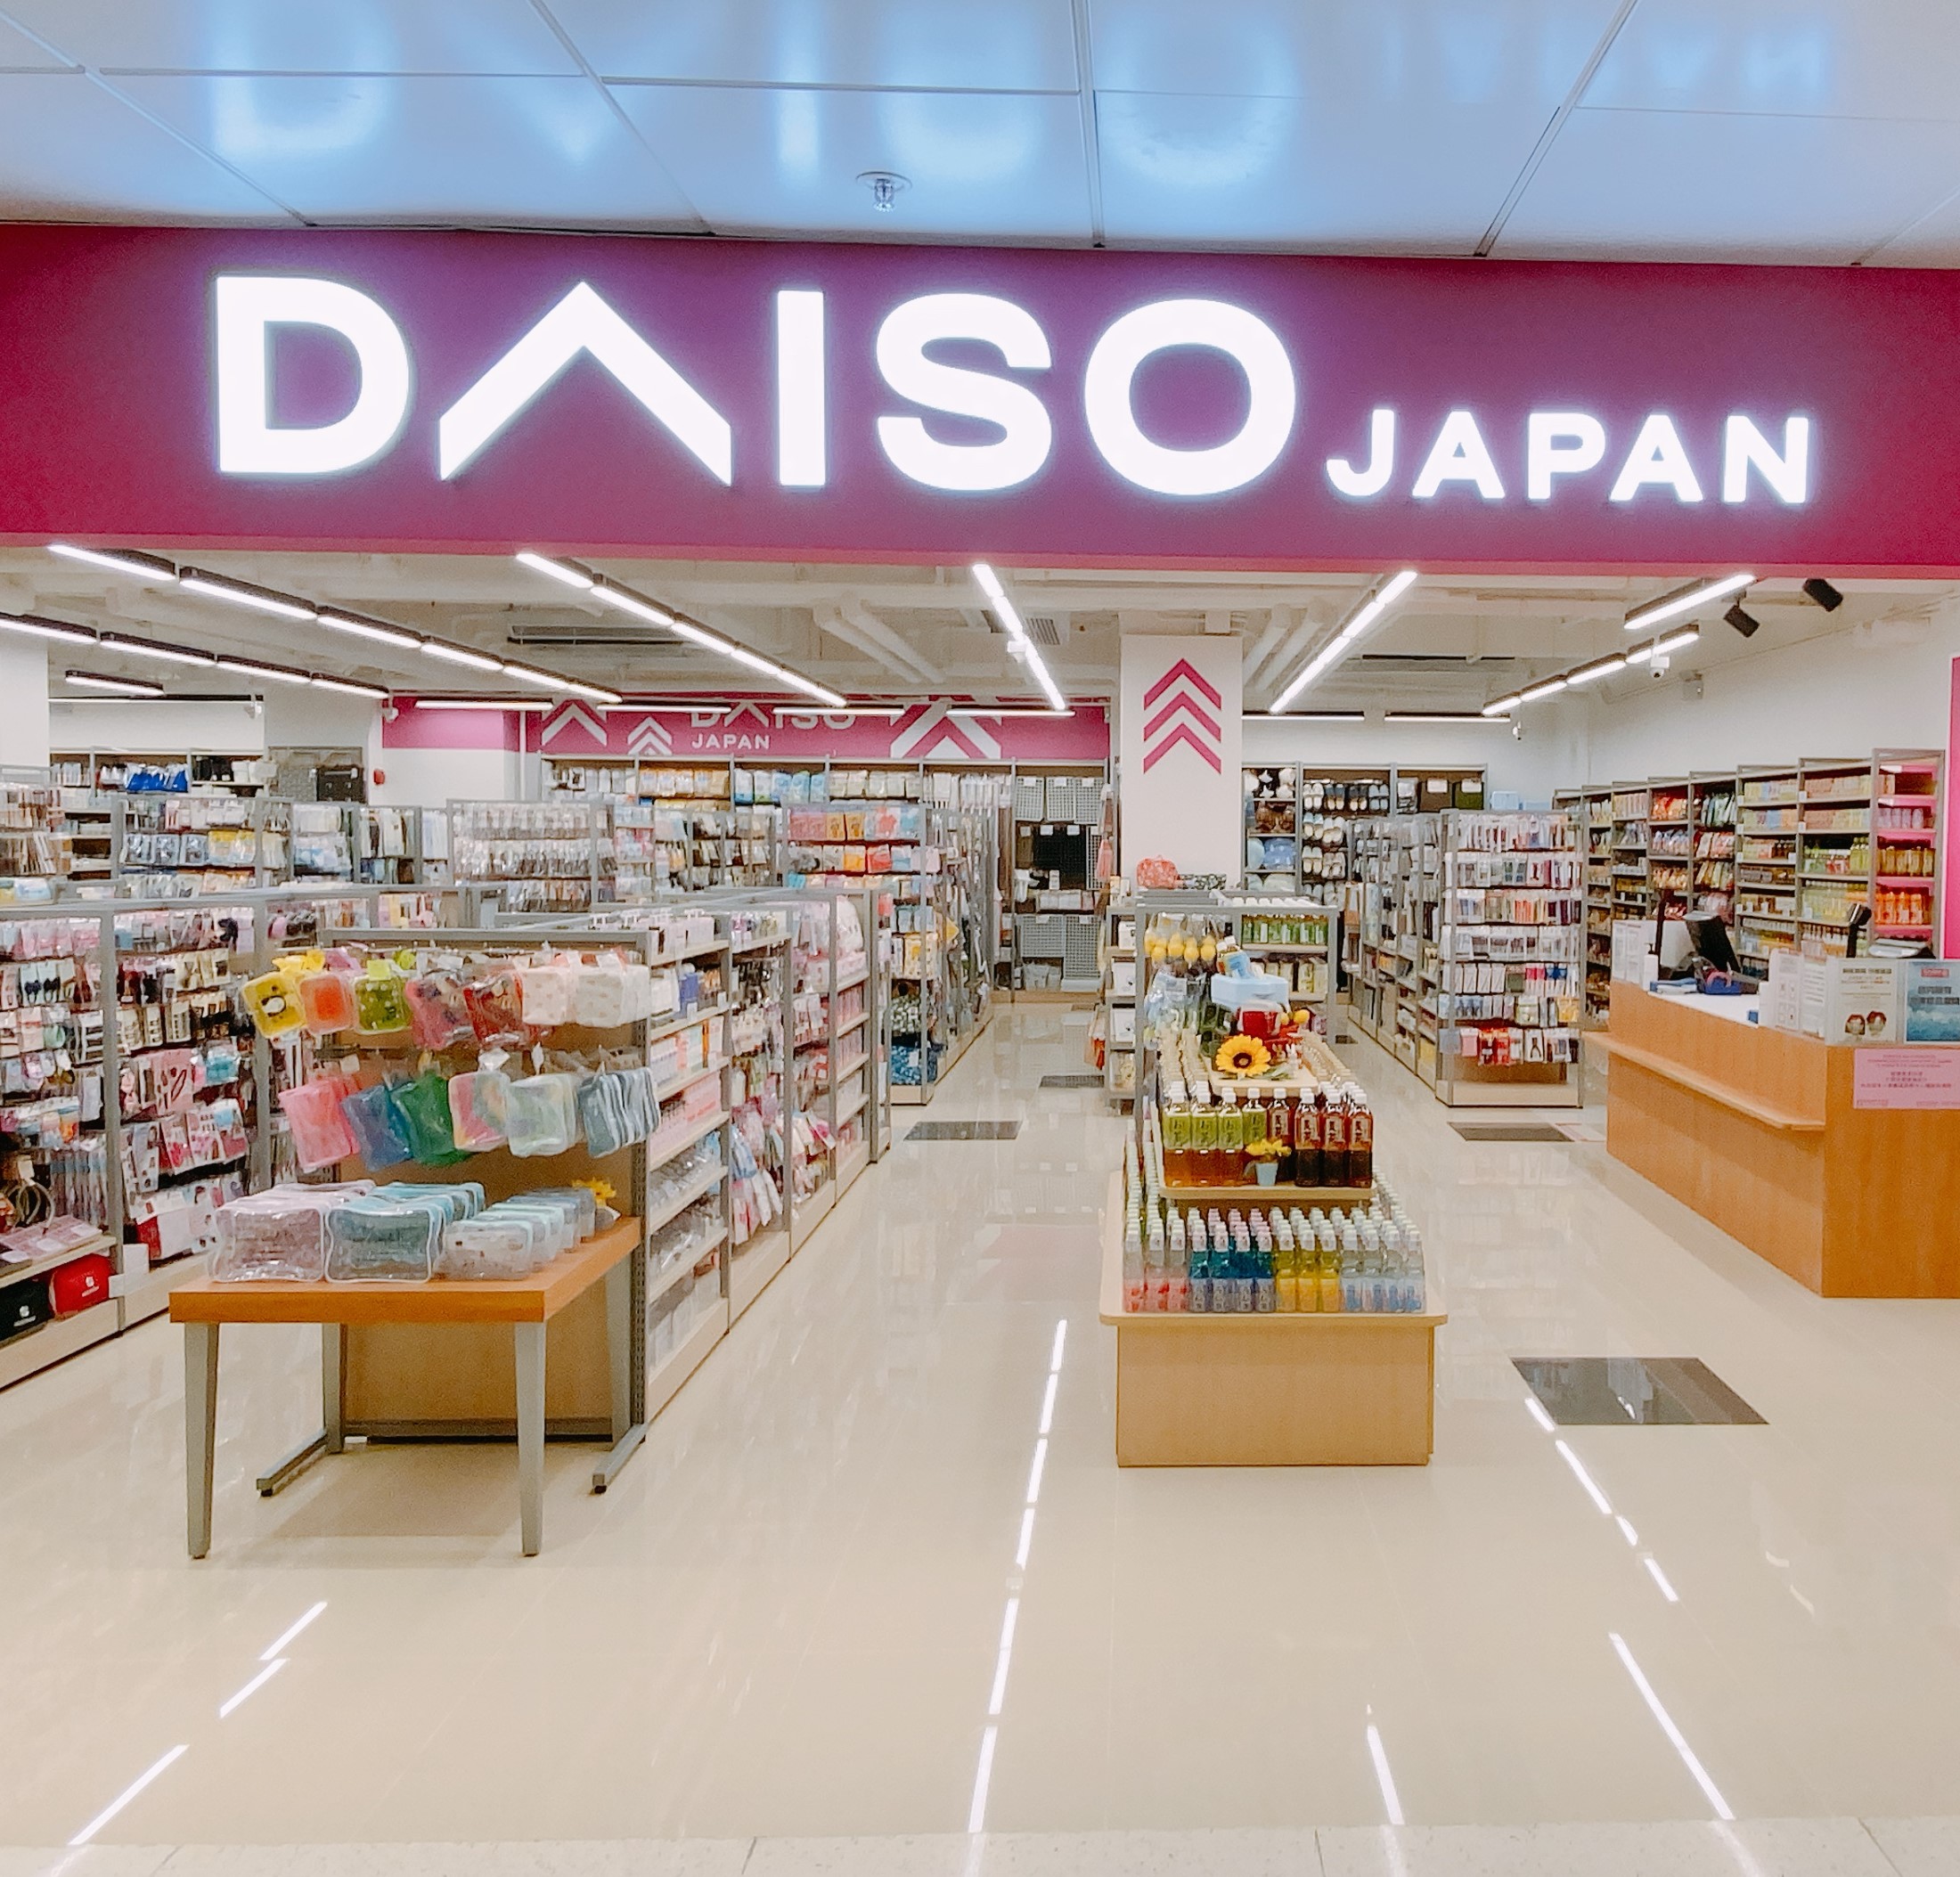 Daiso Japan 淘大店